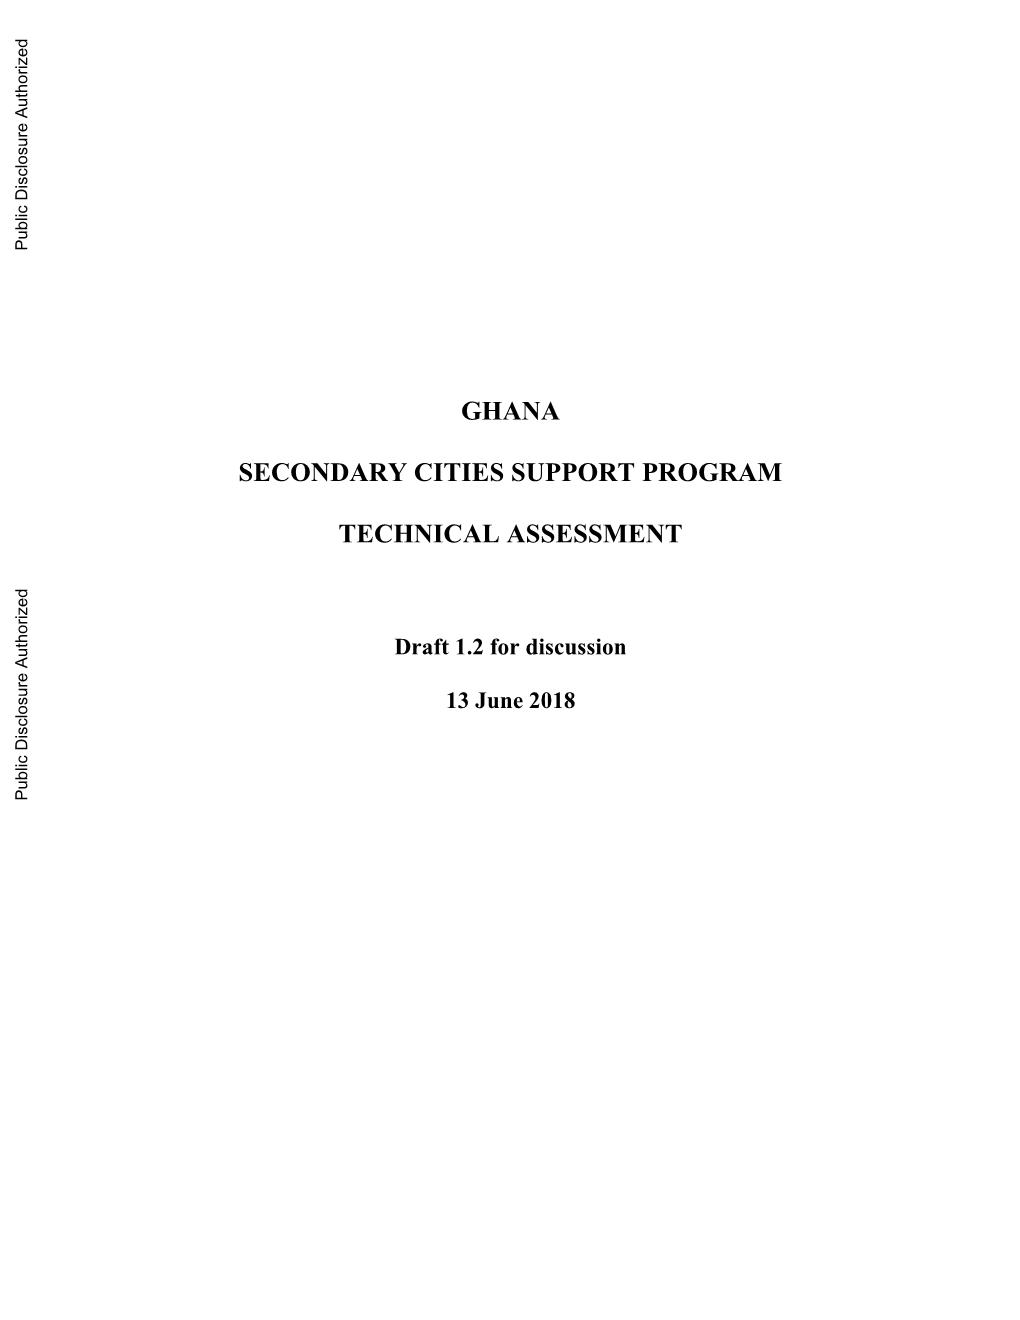 Ghana Secondary Cities Support Program